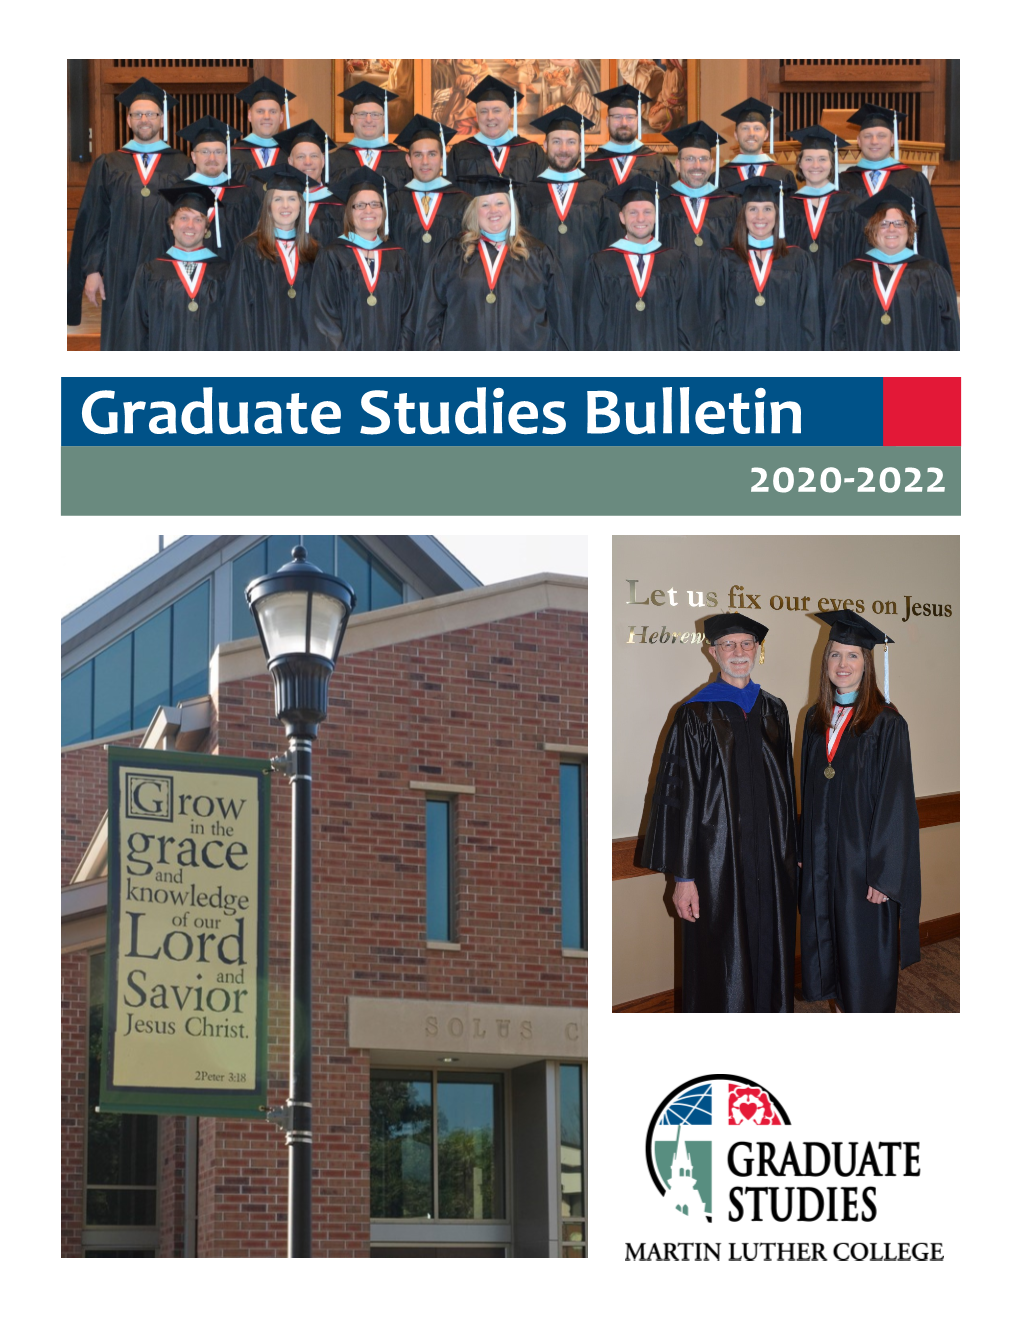 Graduate Studies Bulletin 2020-2022 2019 Graduates and Graduate Faculty